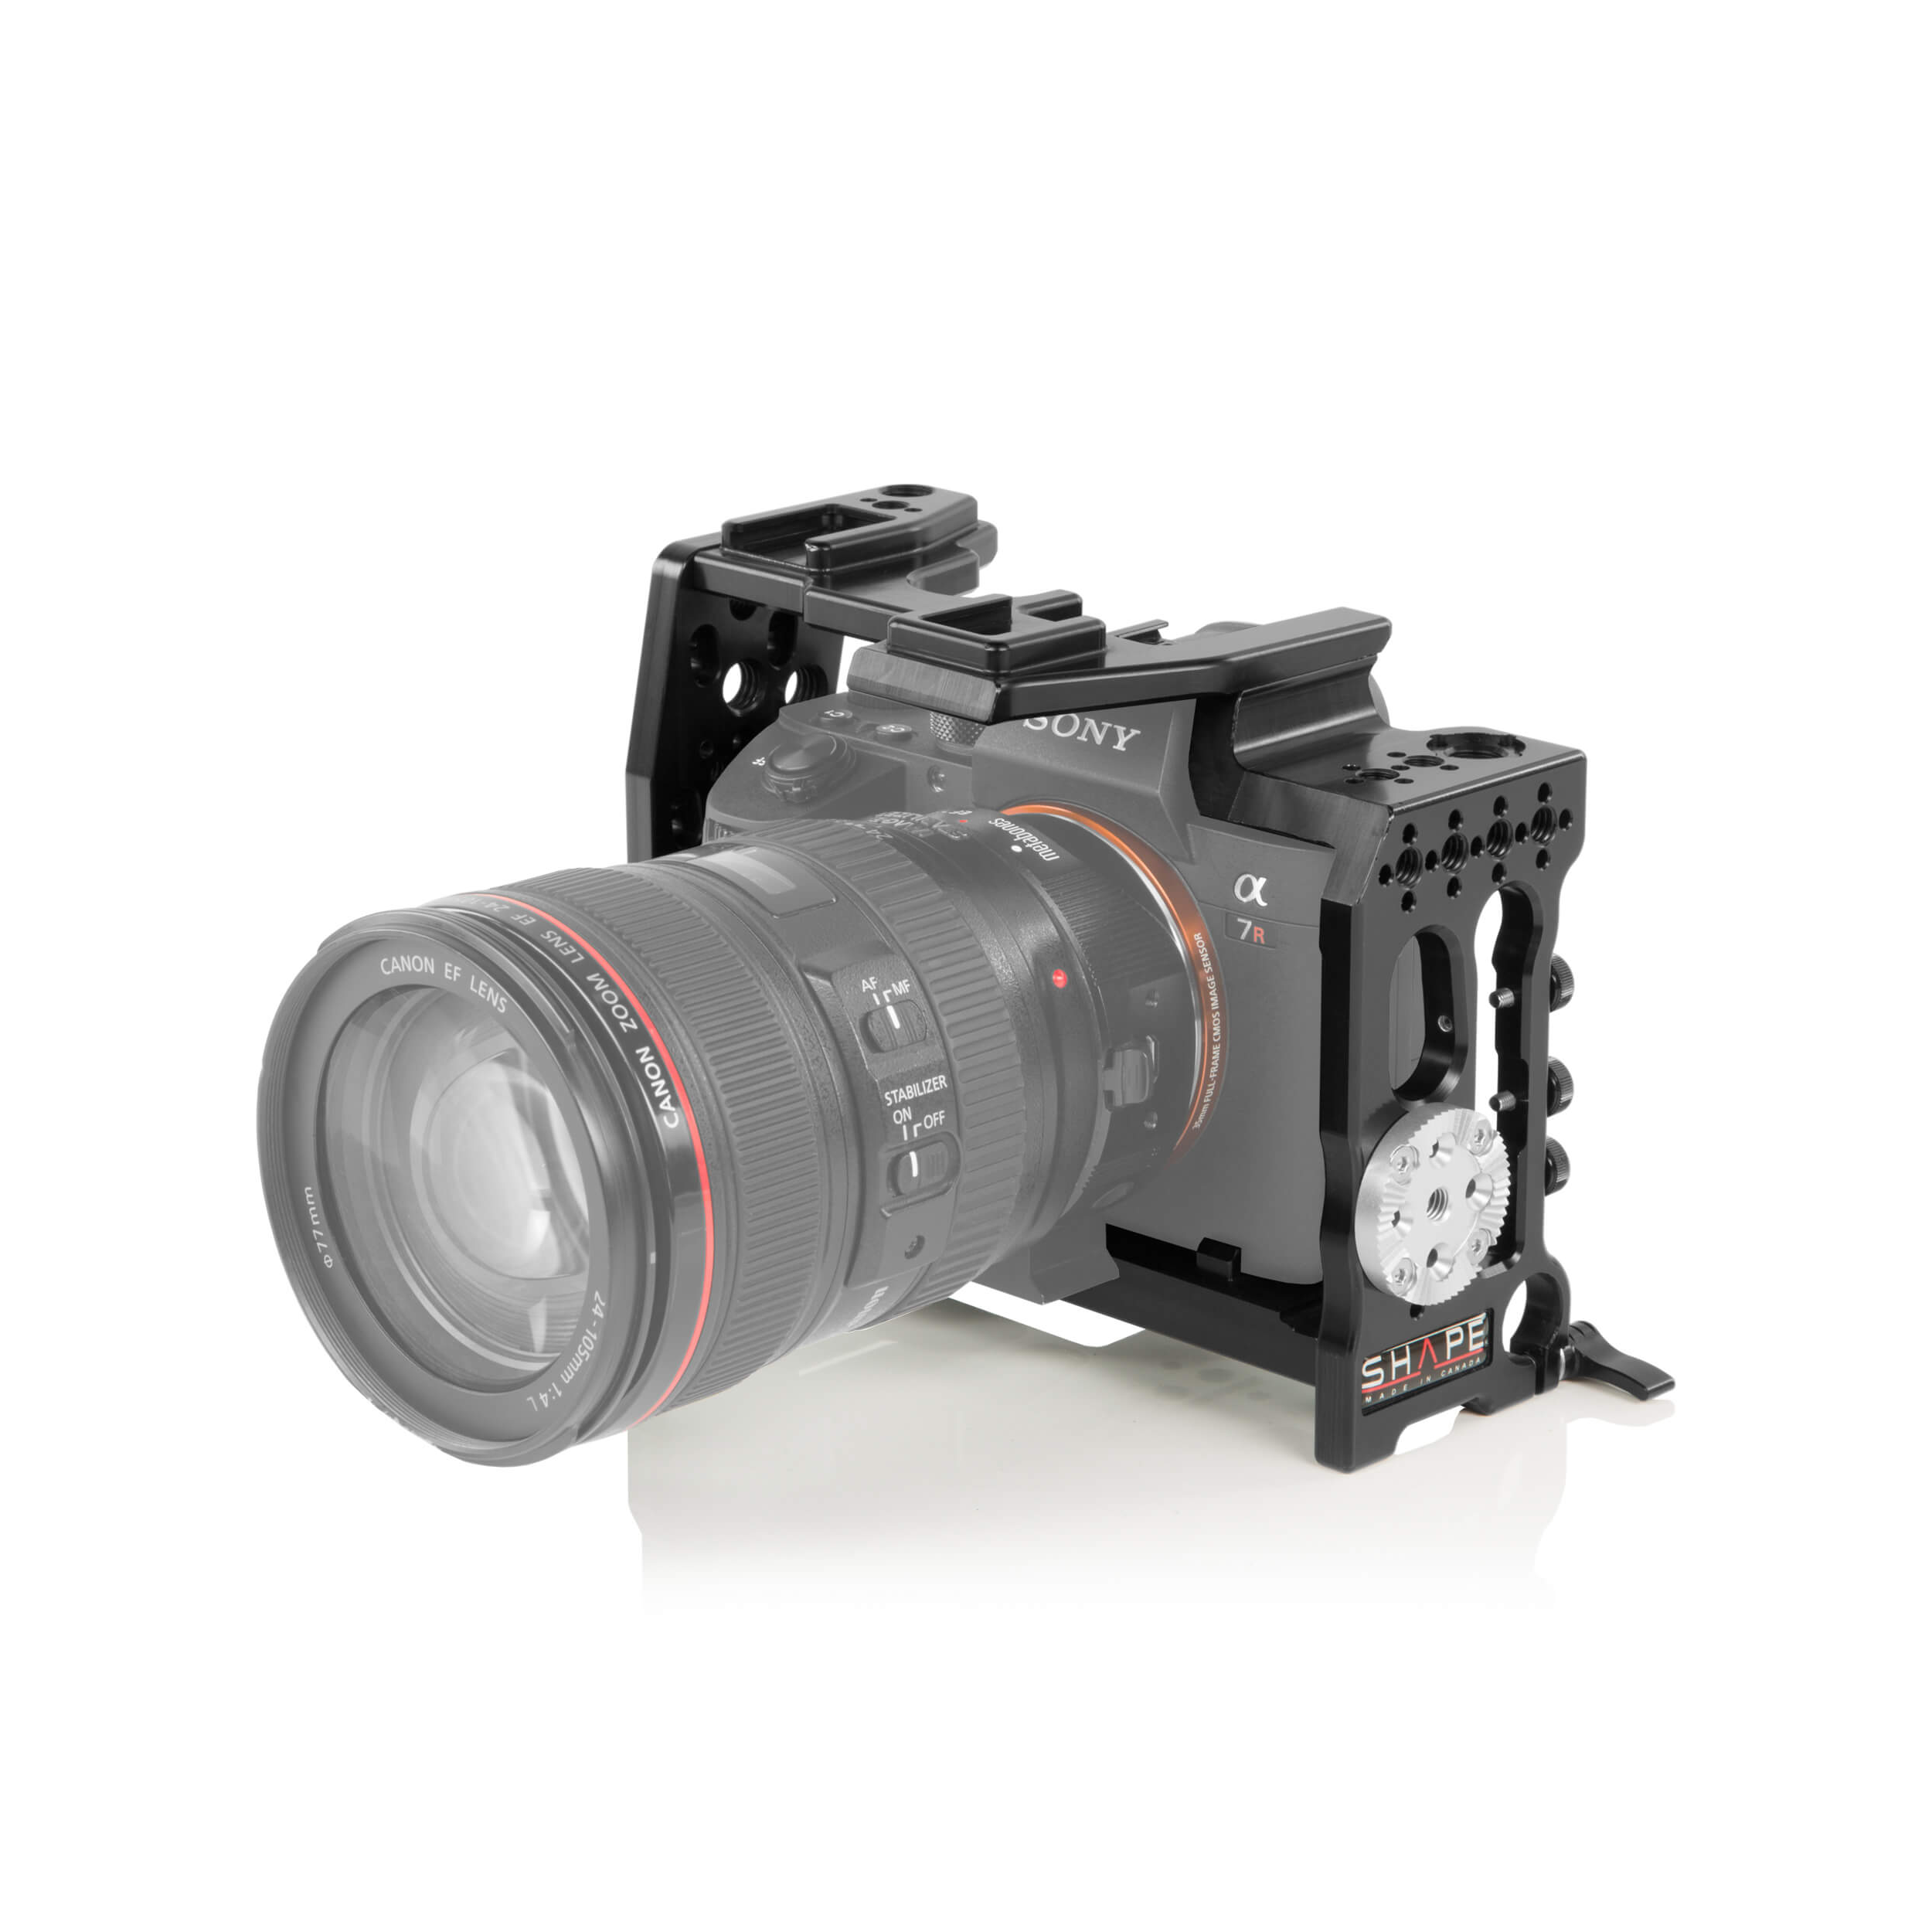 SHAPE Ergonomic Cage for Sony a7R III/a7 III Camera